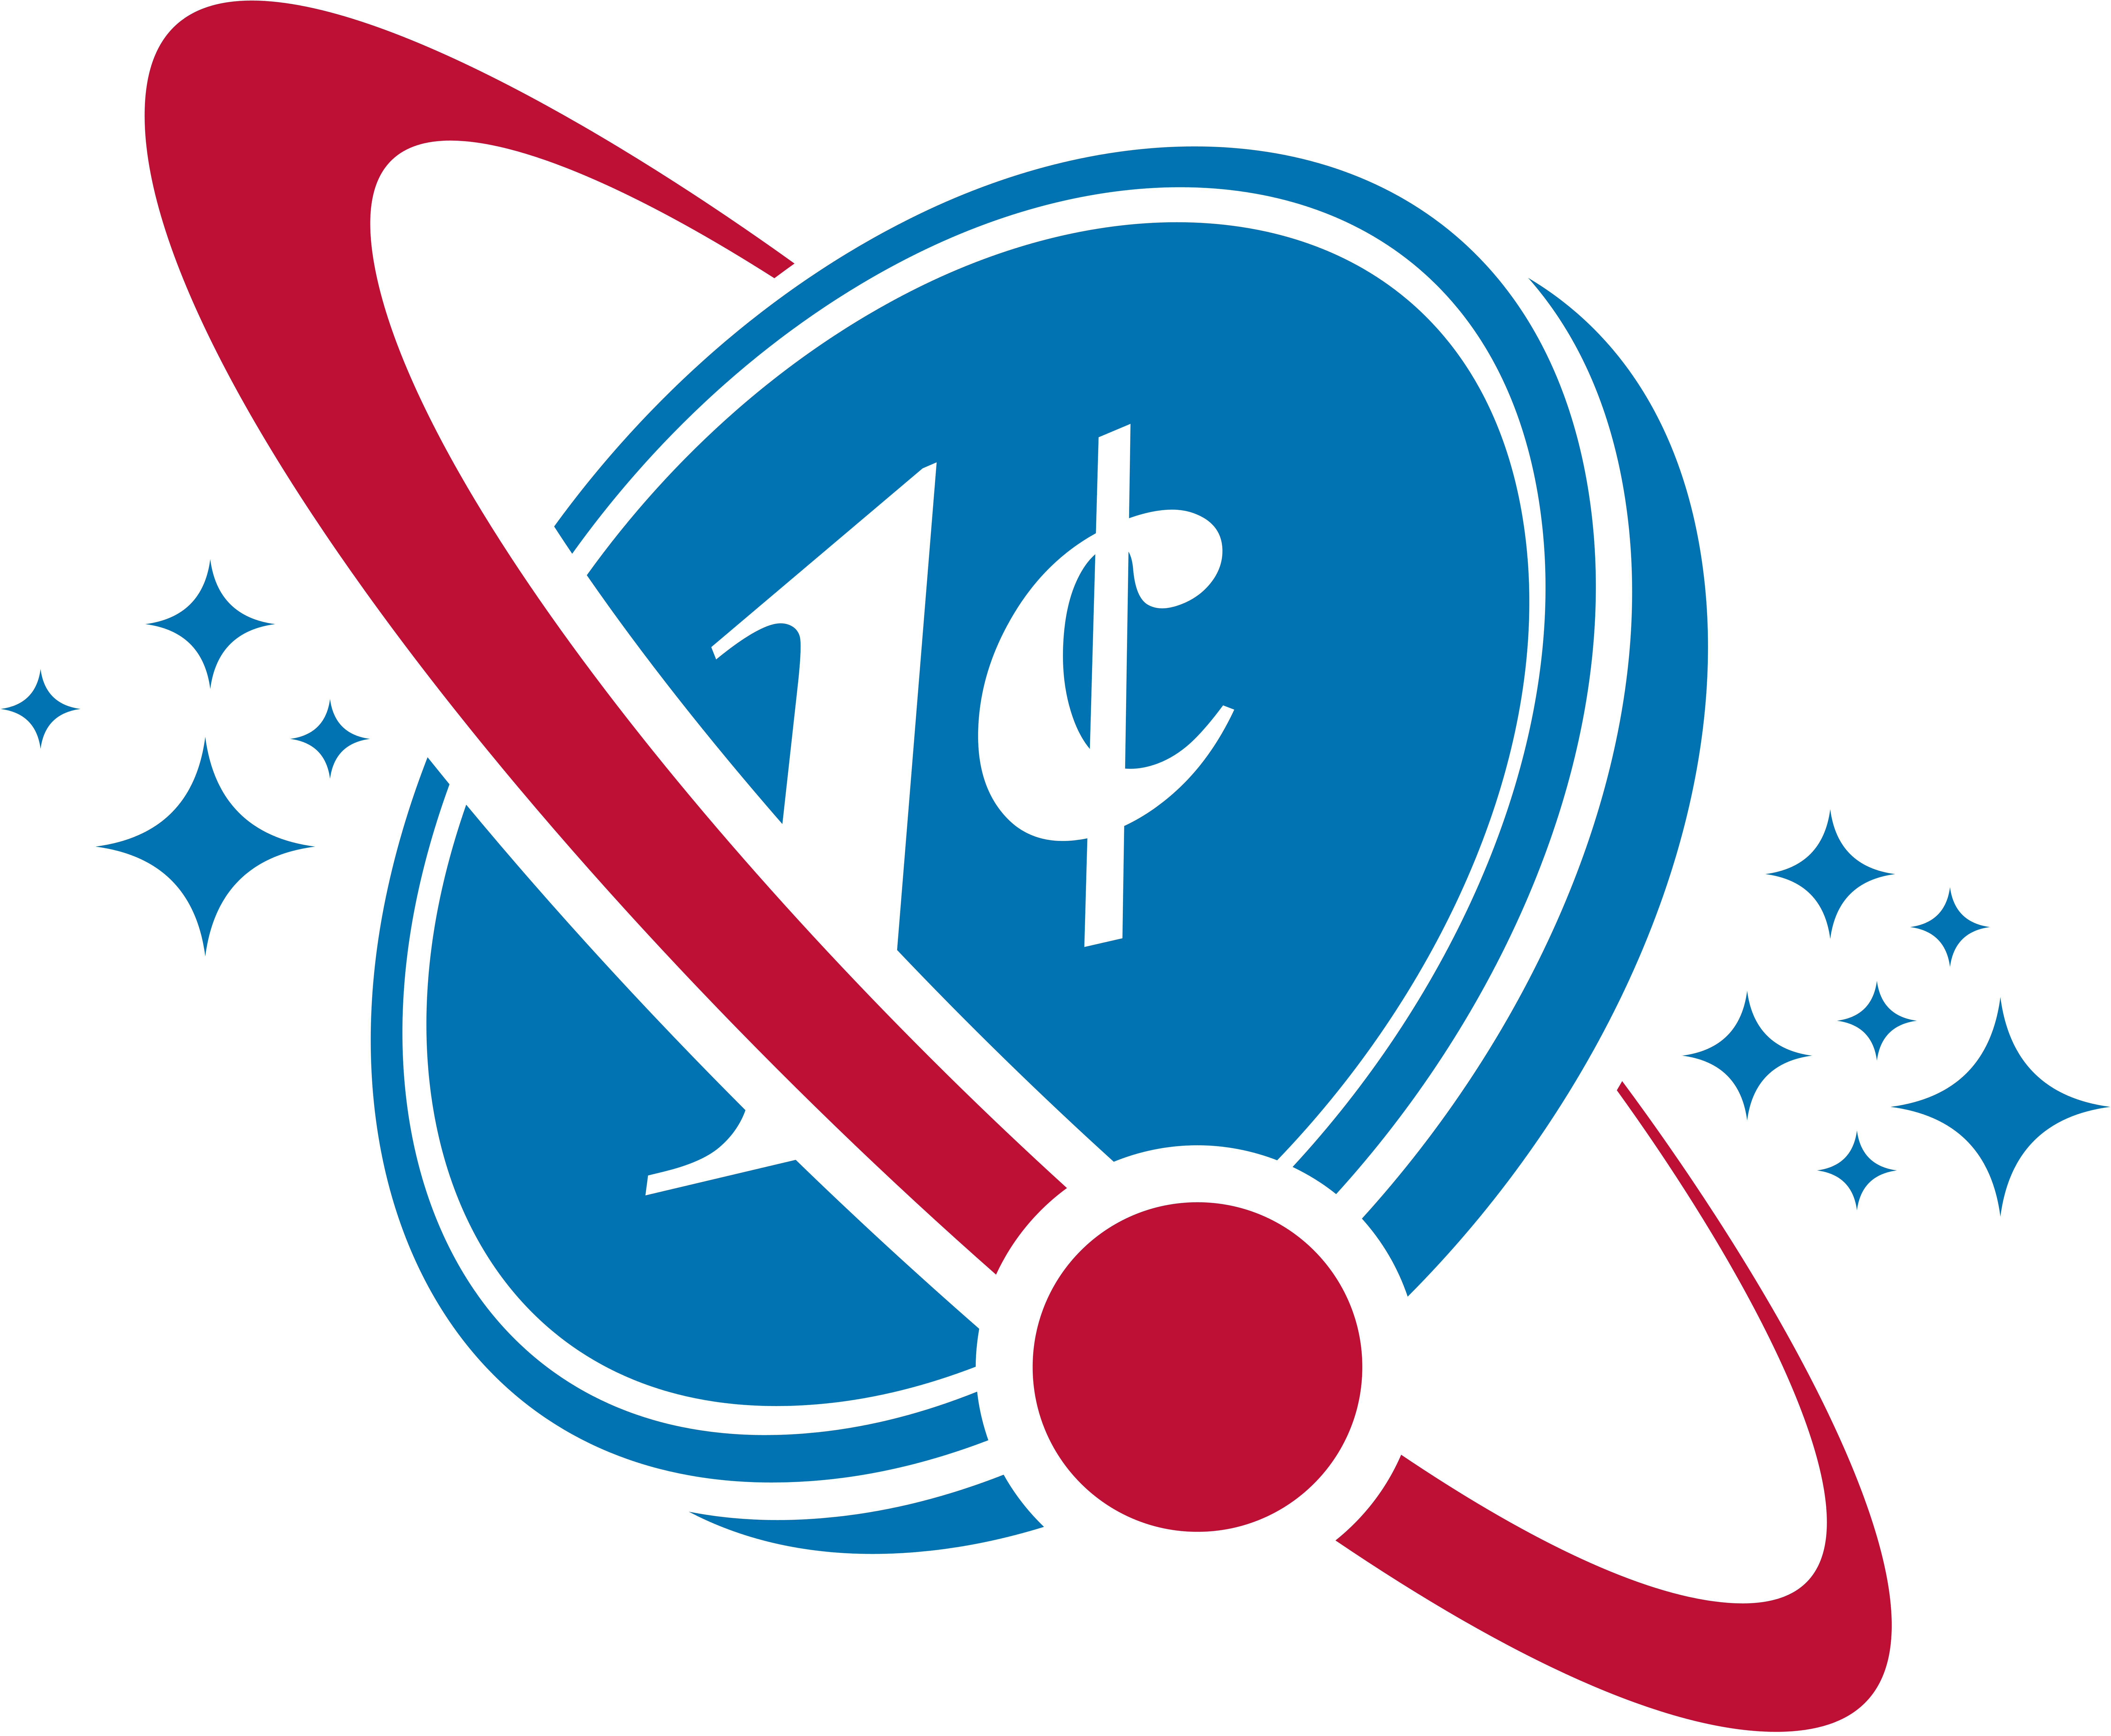 Printable NASA Logo - Free Printable Nasa Logo, Download Free Clip Art, Free Clip Art on ...